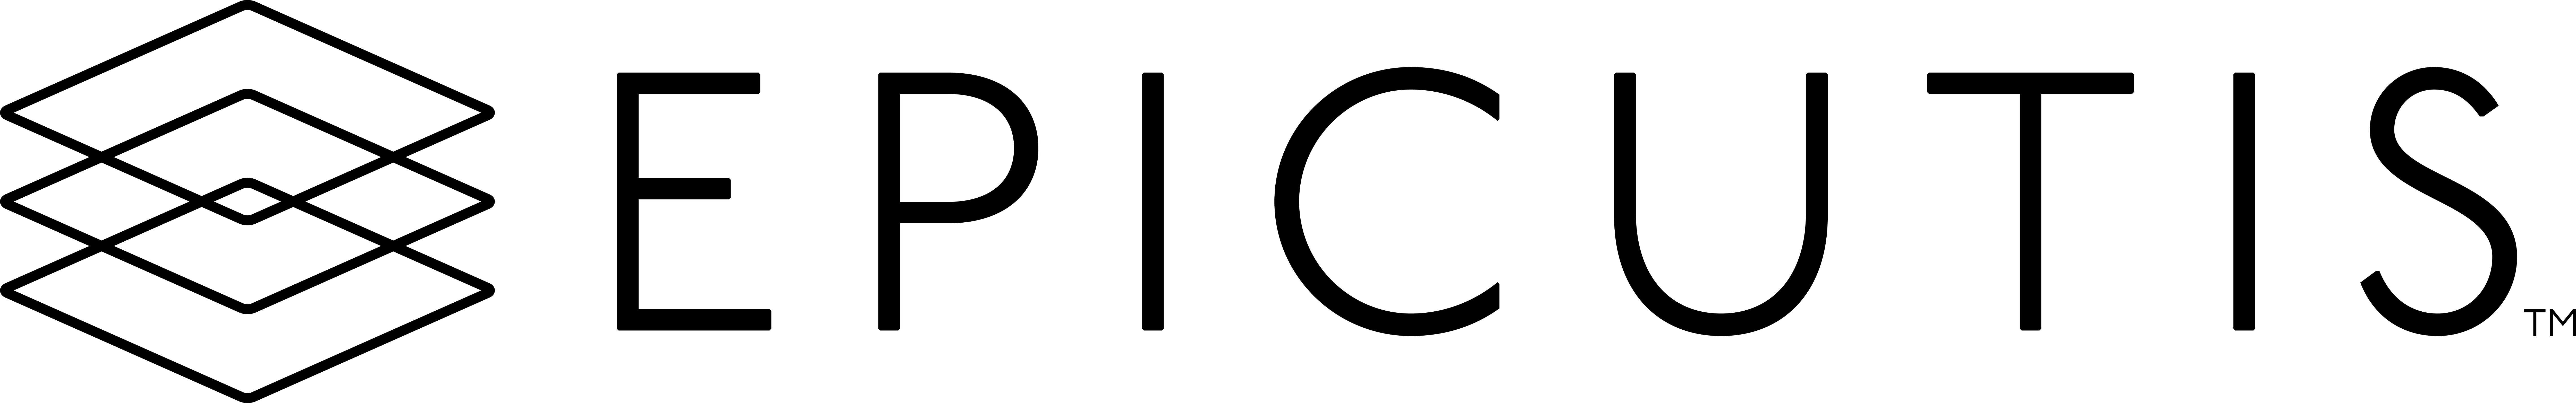 Epicutis Logo: this image has no function